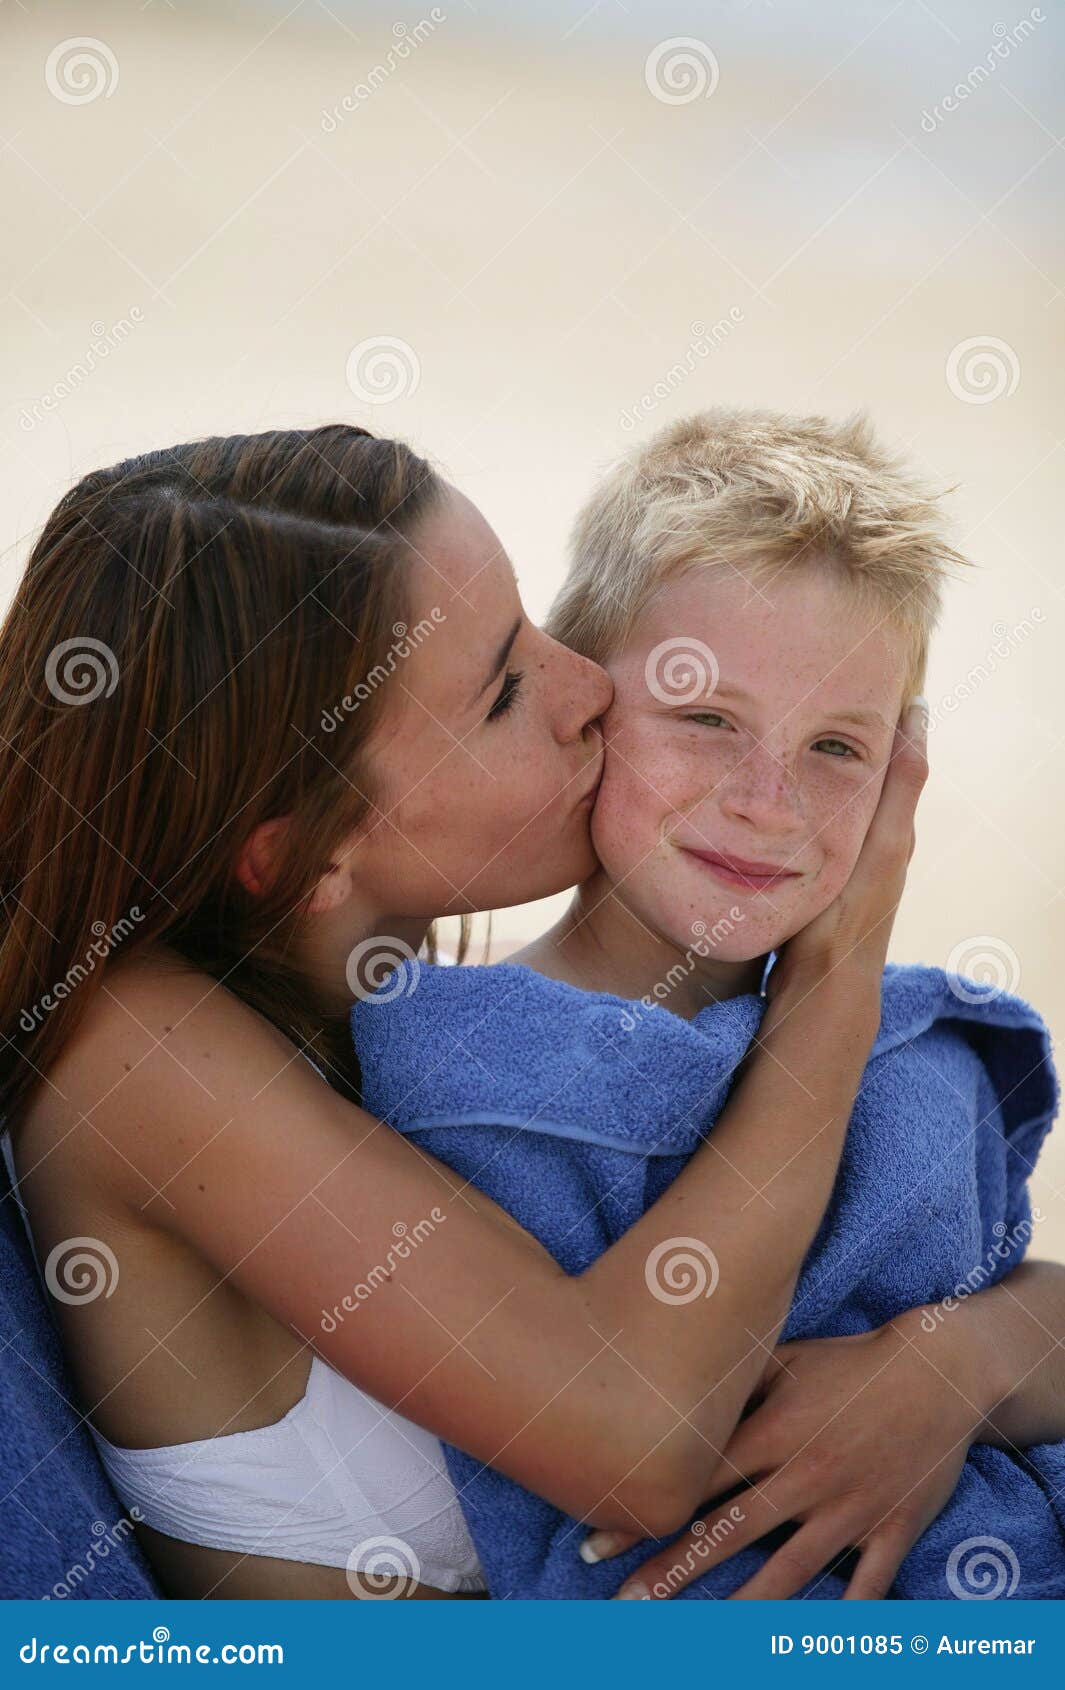 best leader add photo woman kiss a boy